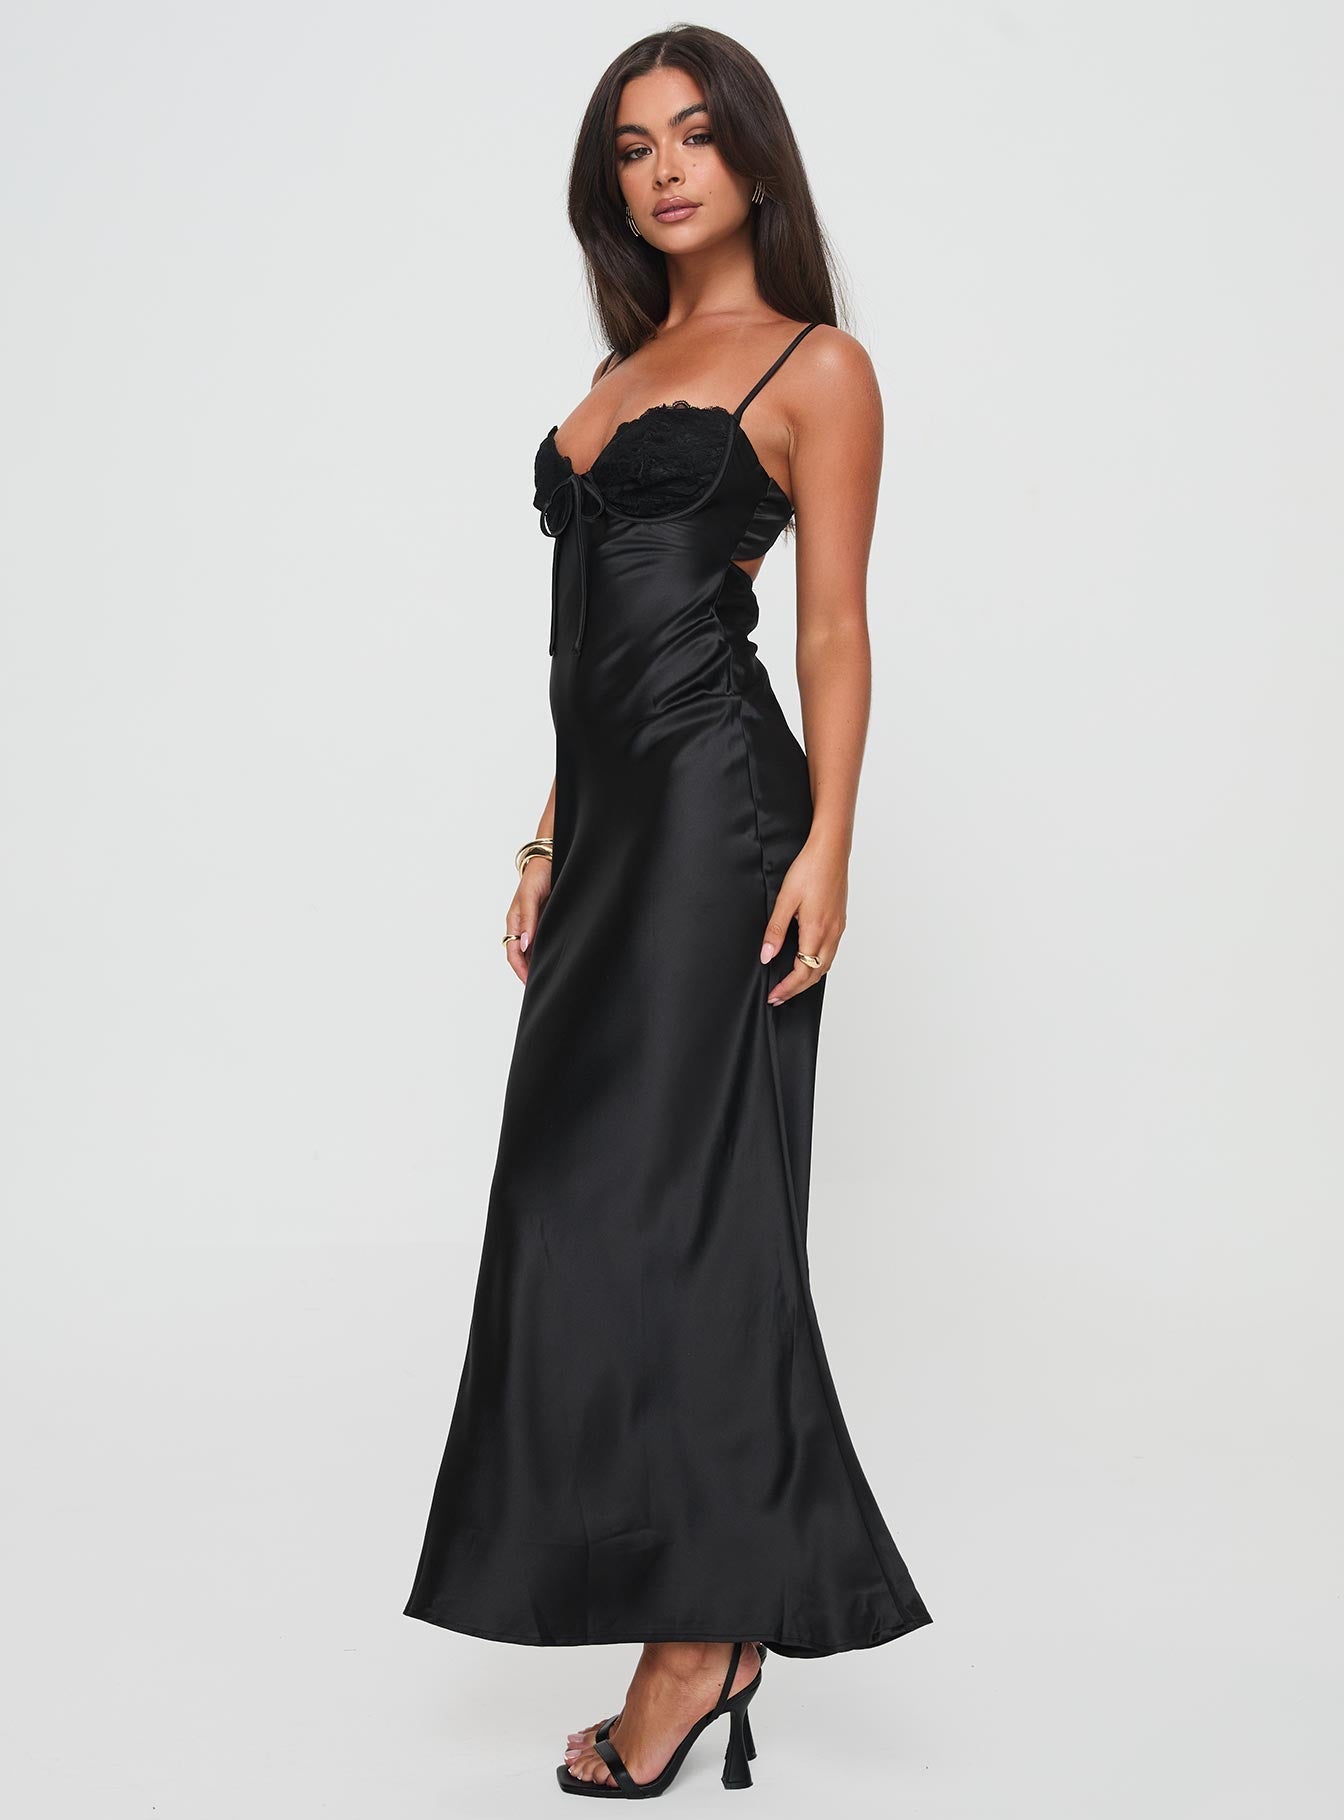 Shop Formal Dress - Fadyen Bias Cut Maxi Dress Black sixth image